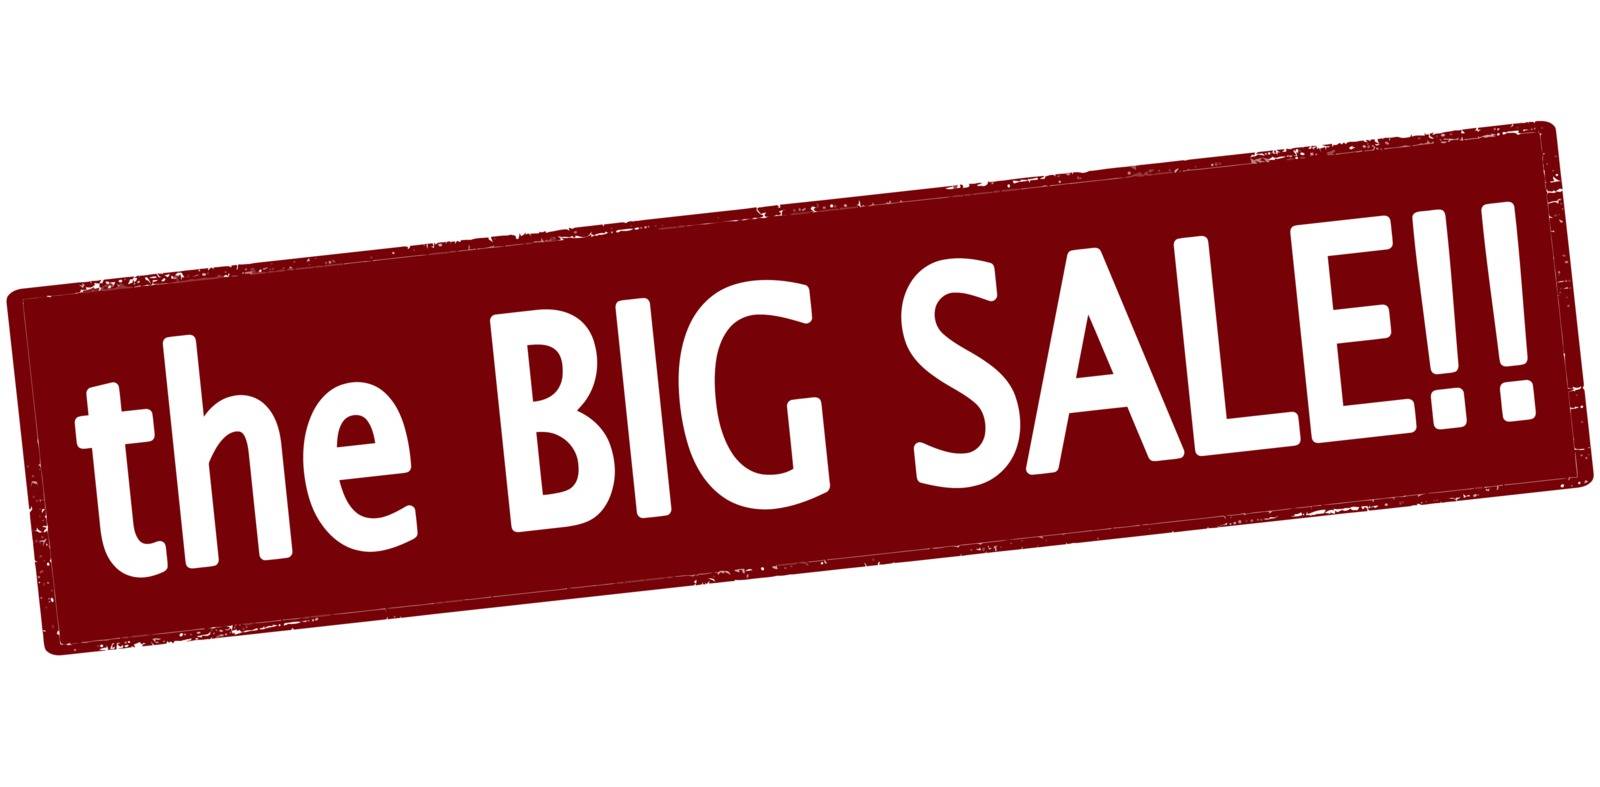 The big sale by carmenbobo